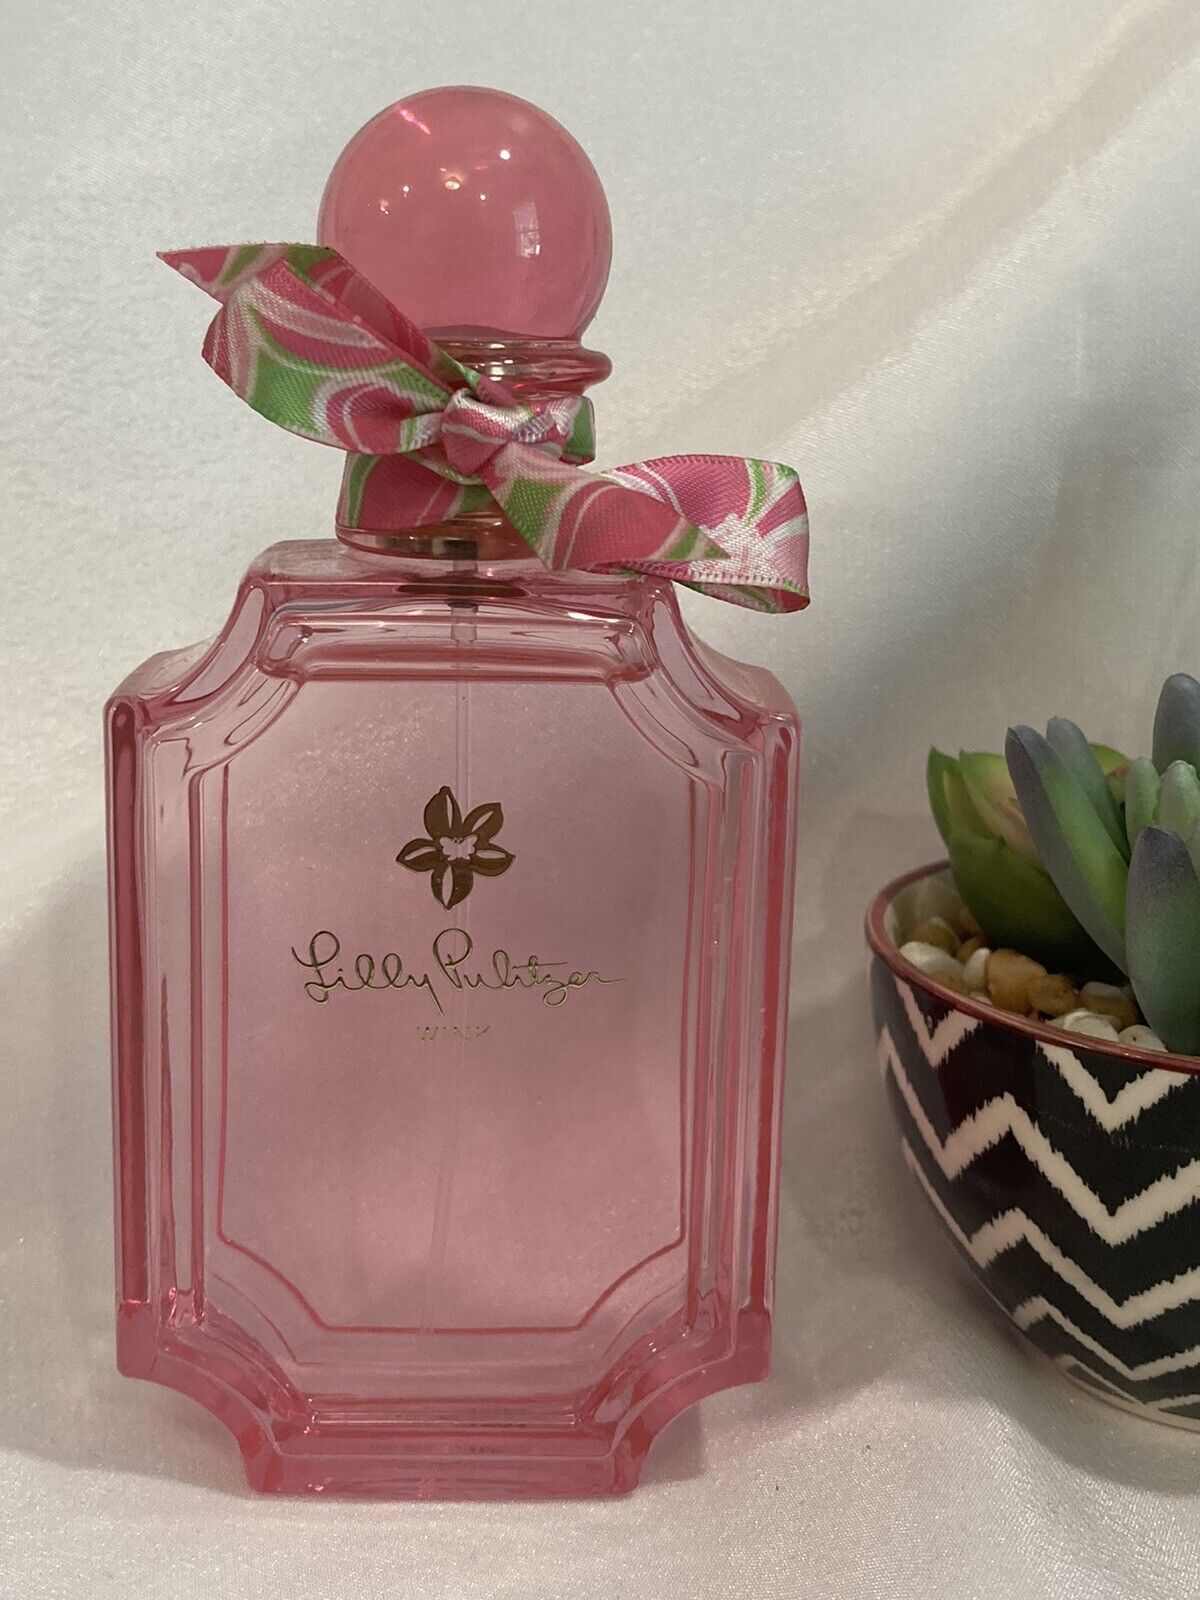 LILLY PULITZER WINK 3.4oz / 100ML  Eau de Parfum Perfume EDP Spray New No Box